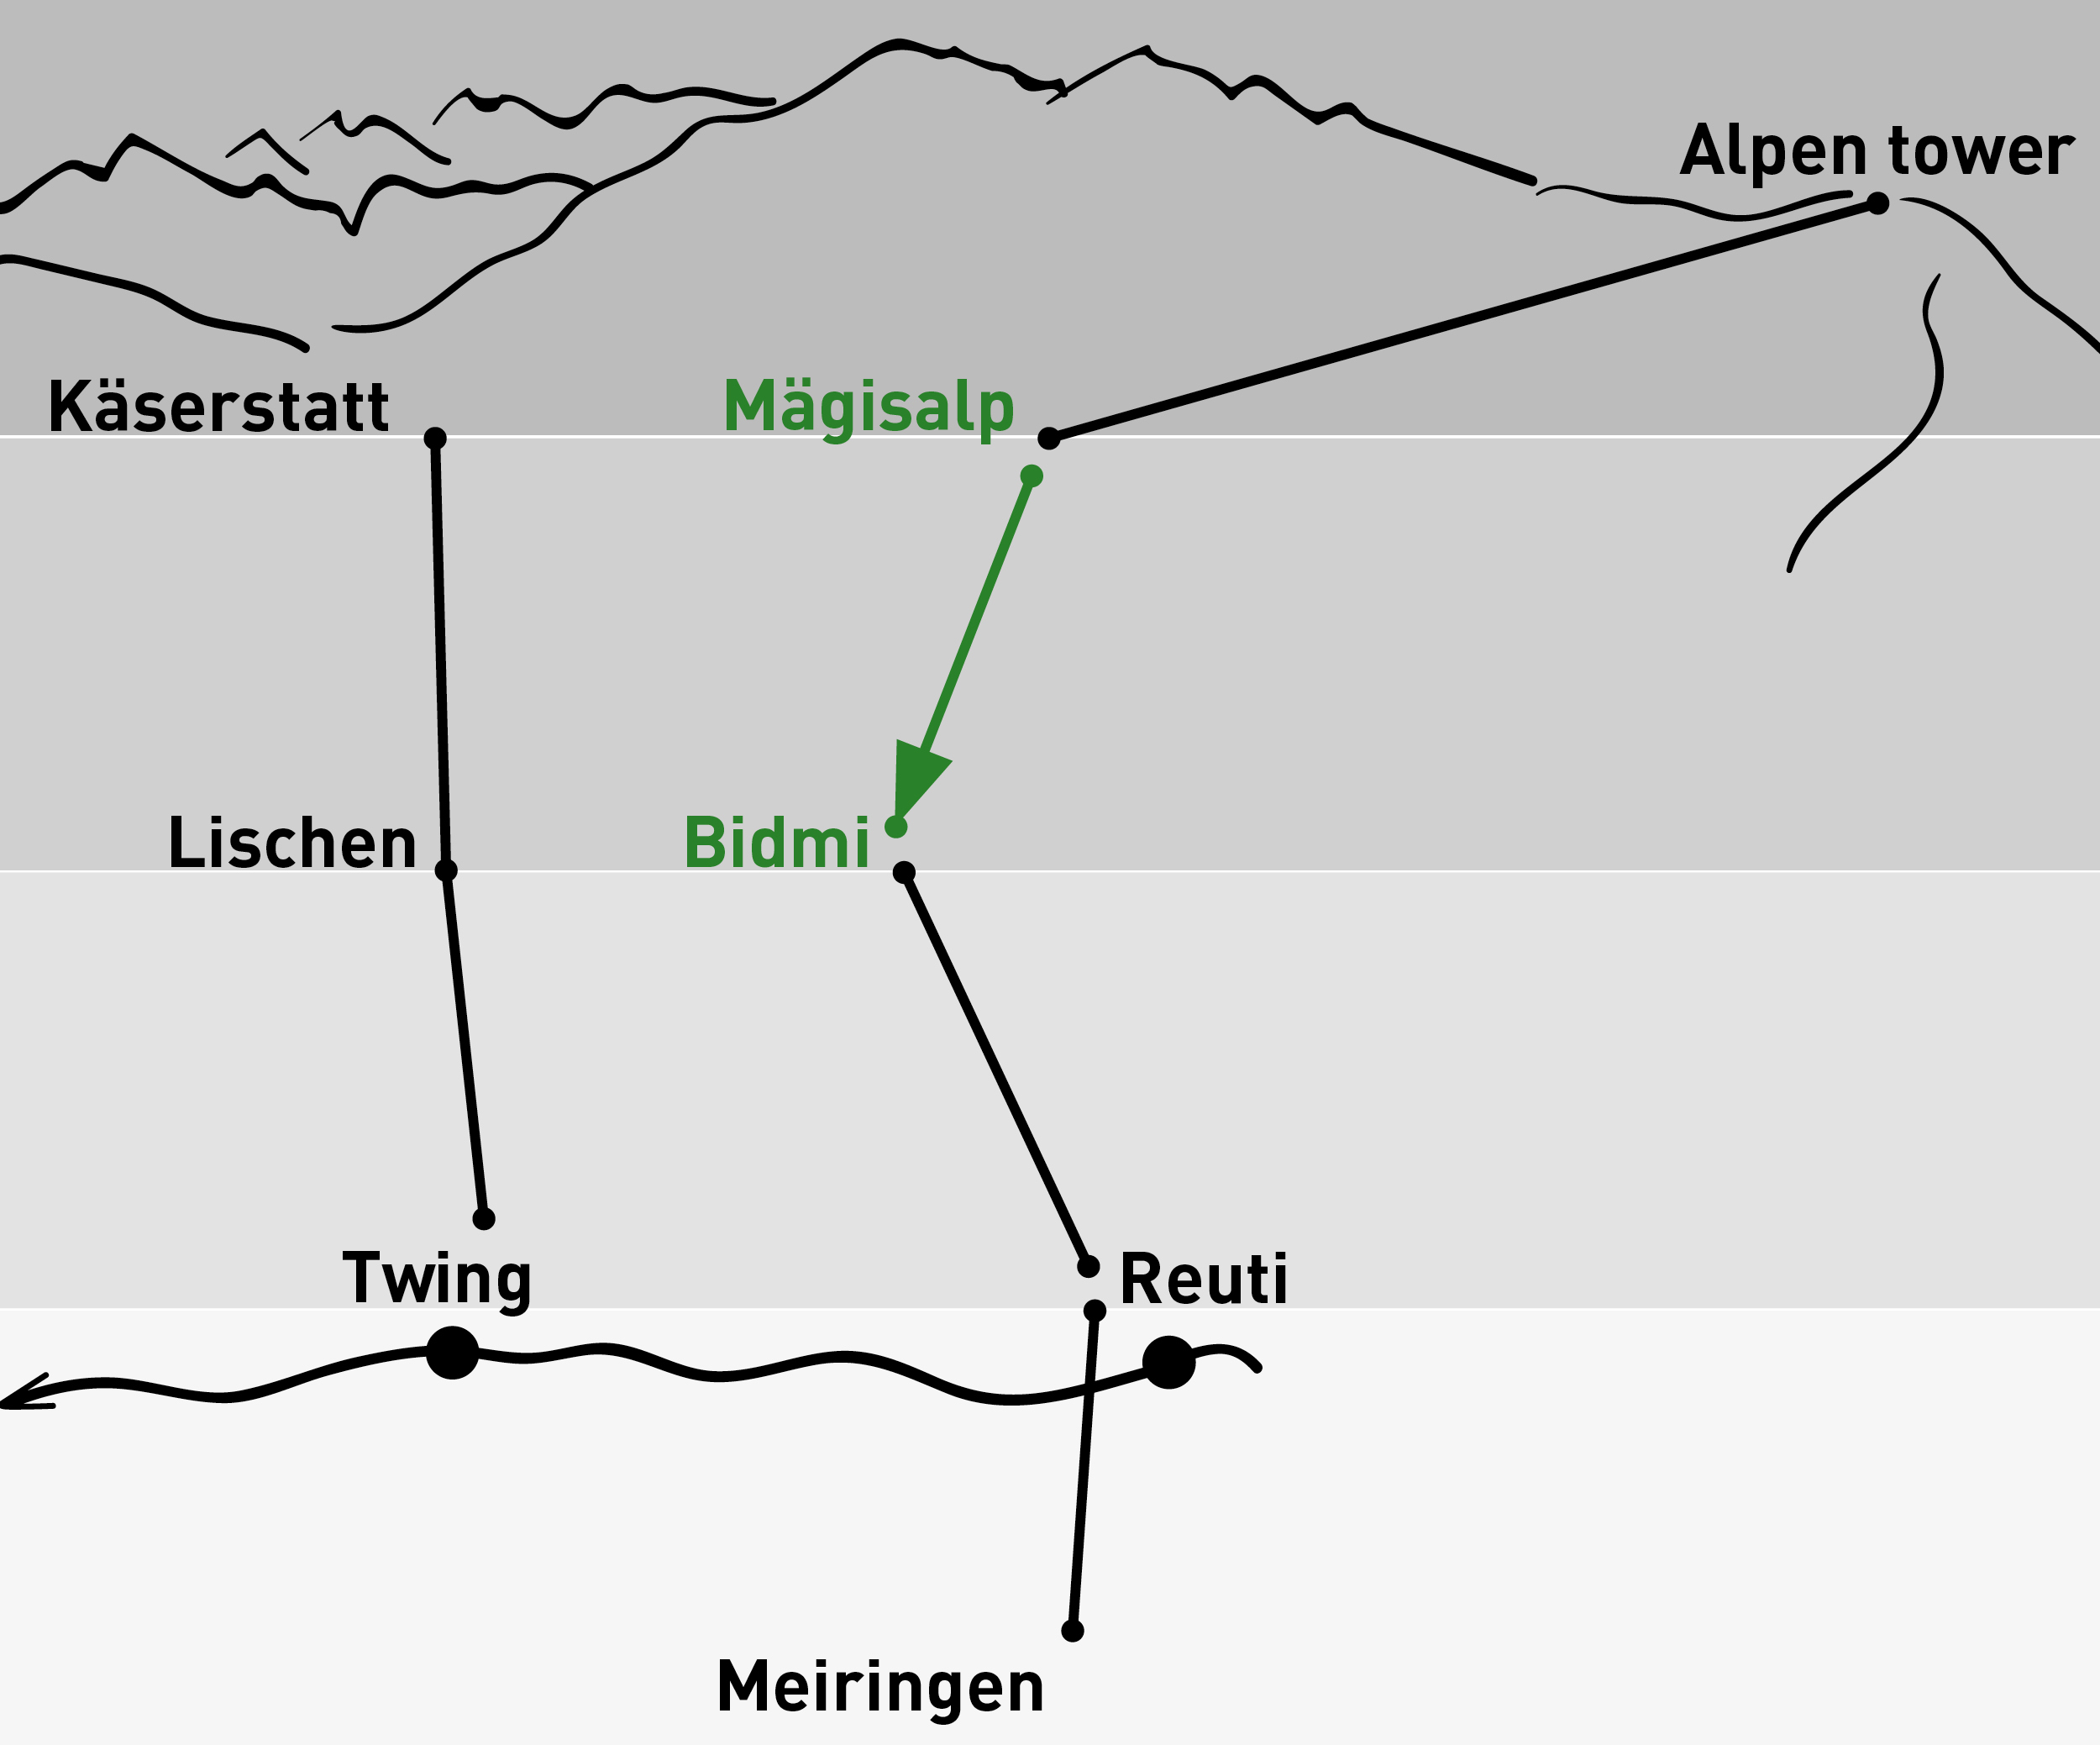 Mägisalp - Bidmi | One-way trip